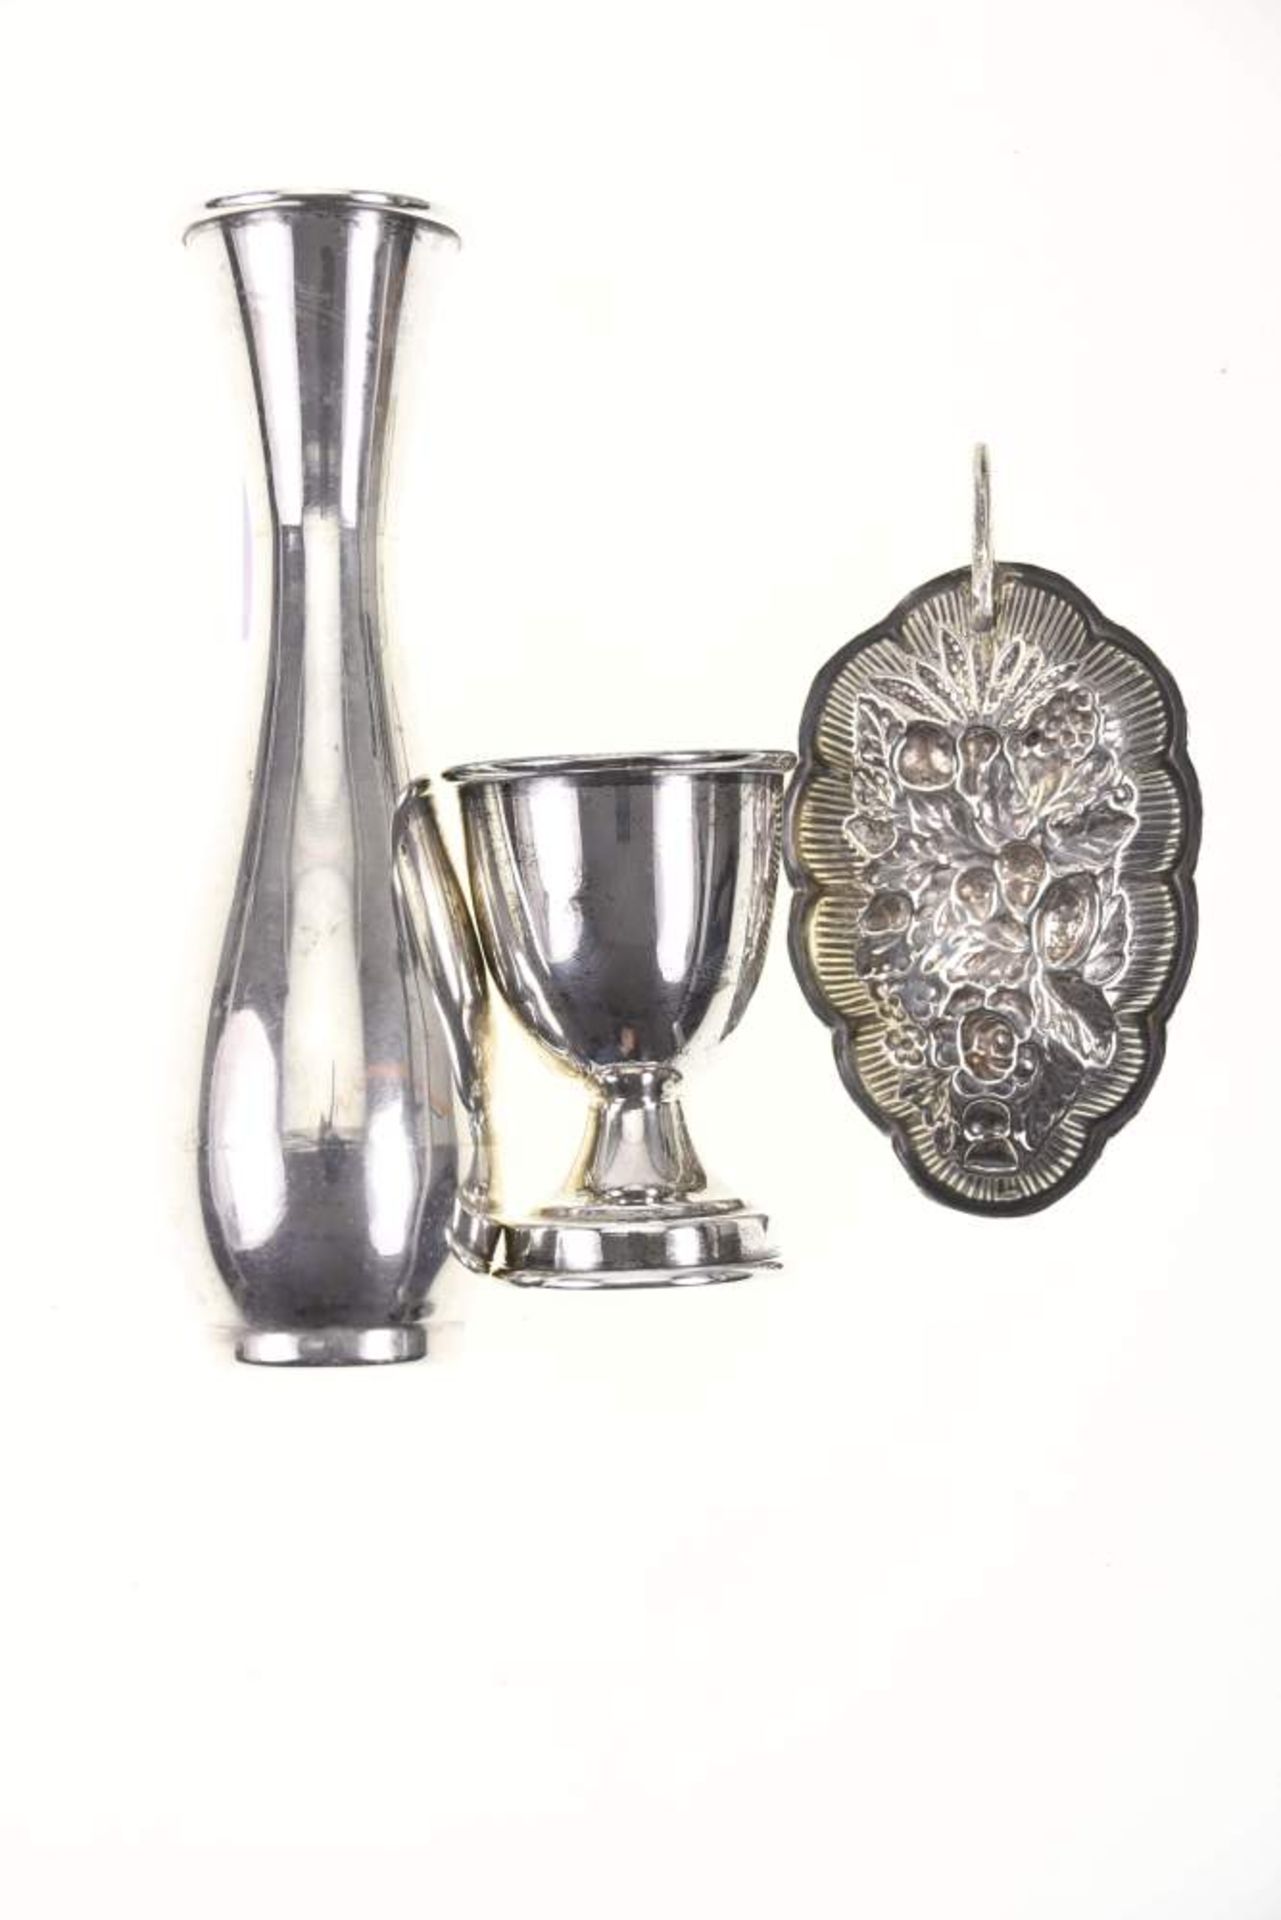 Silberset dreiteilig, 925 Silber, Griechenland 20 Jh., Vase 14,5x 4,5cmm, Eierbecher 6,5x 4,5cm, - Bild 6 aus 8